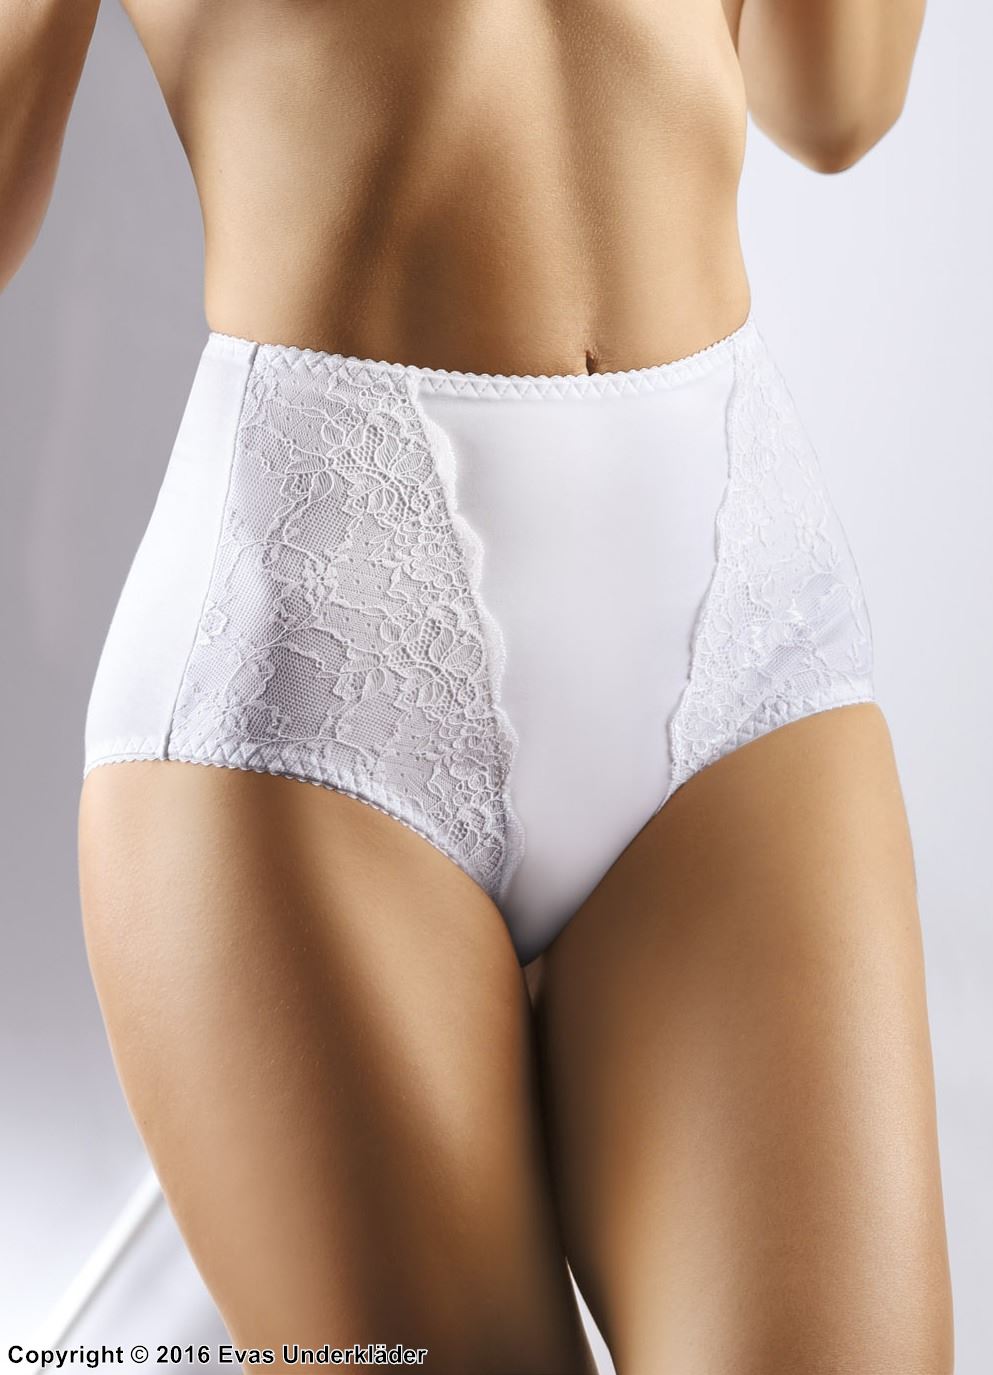 Romantic high waist panties, lace overlay